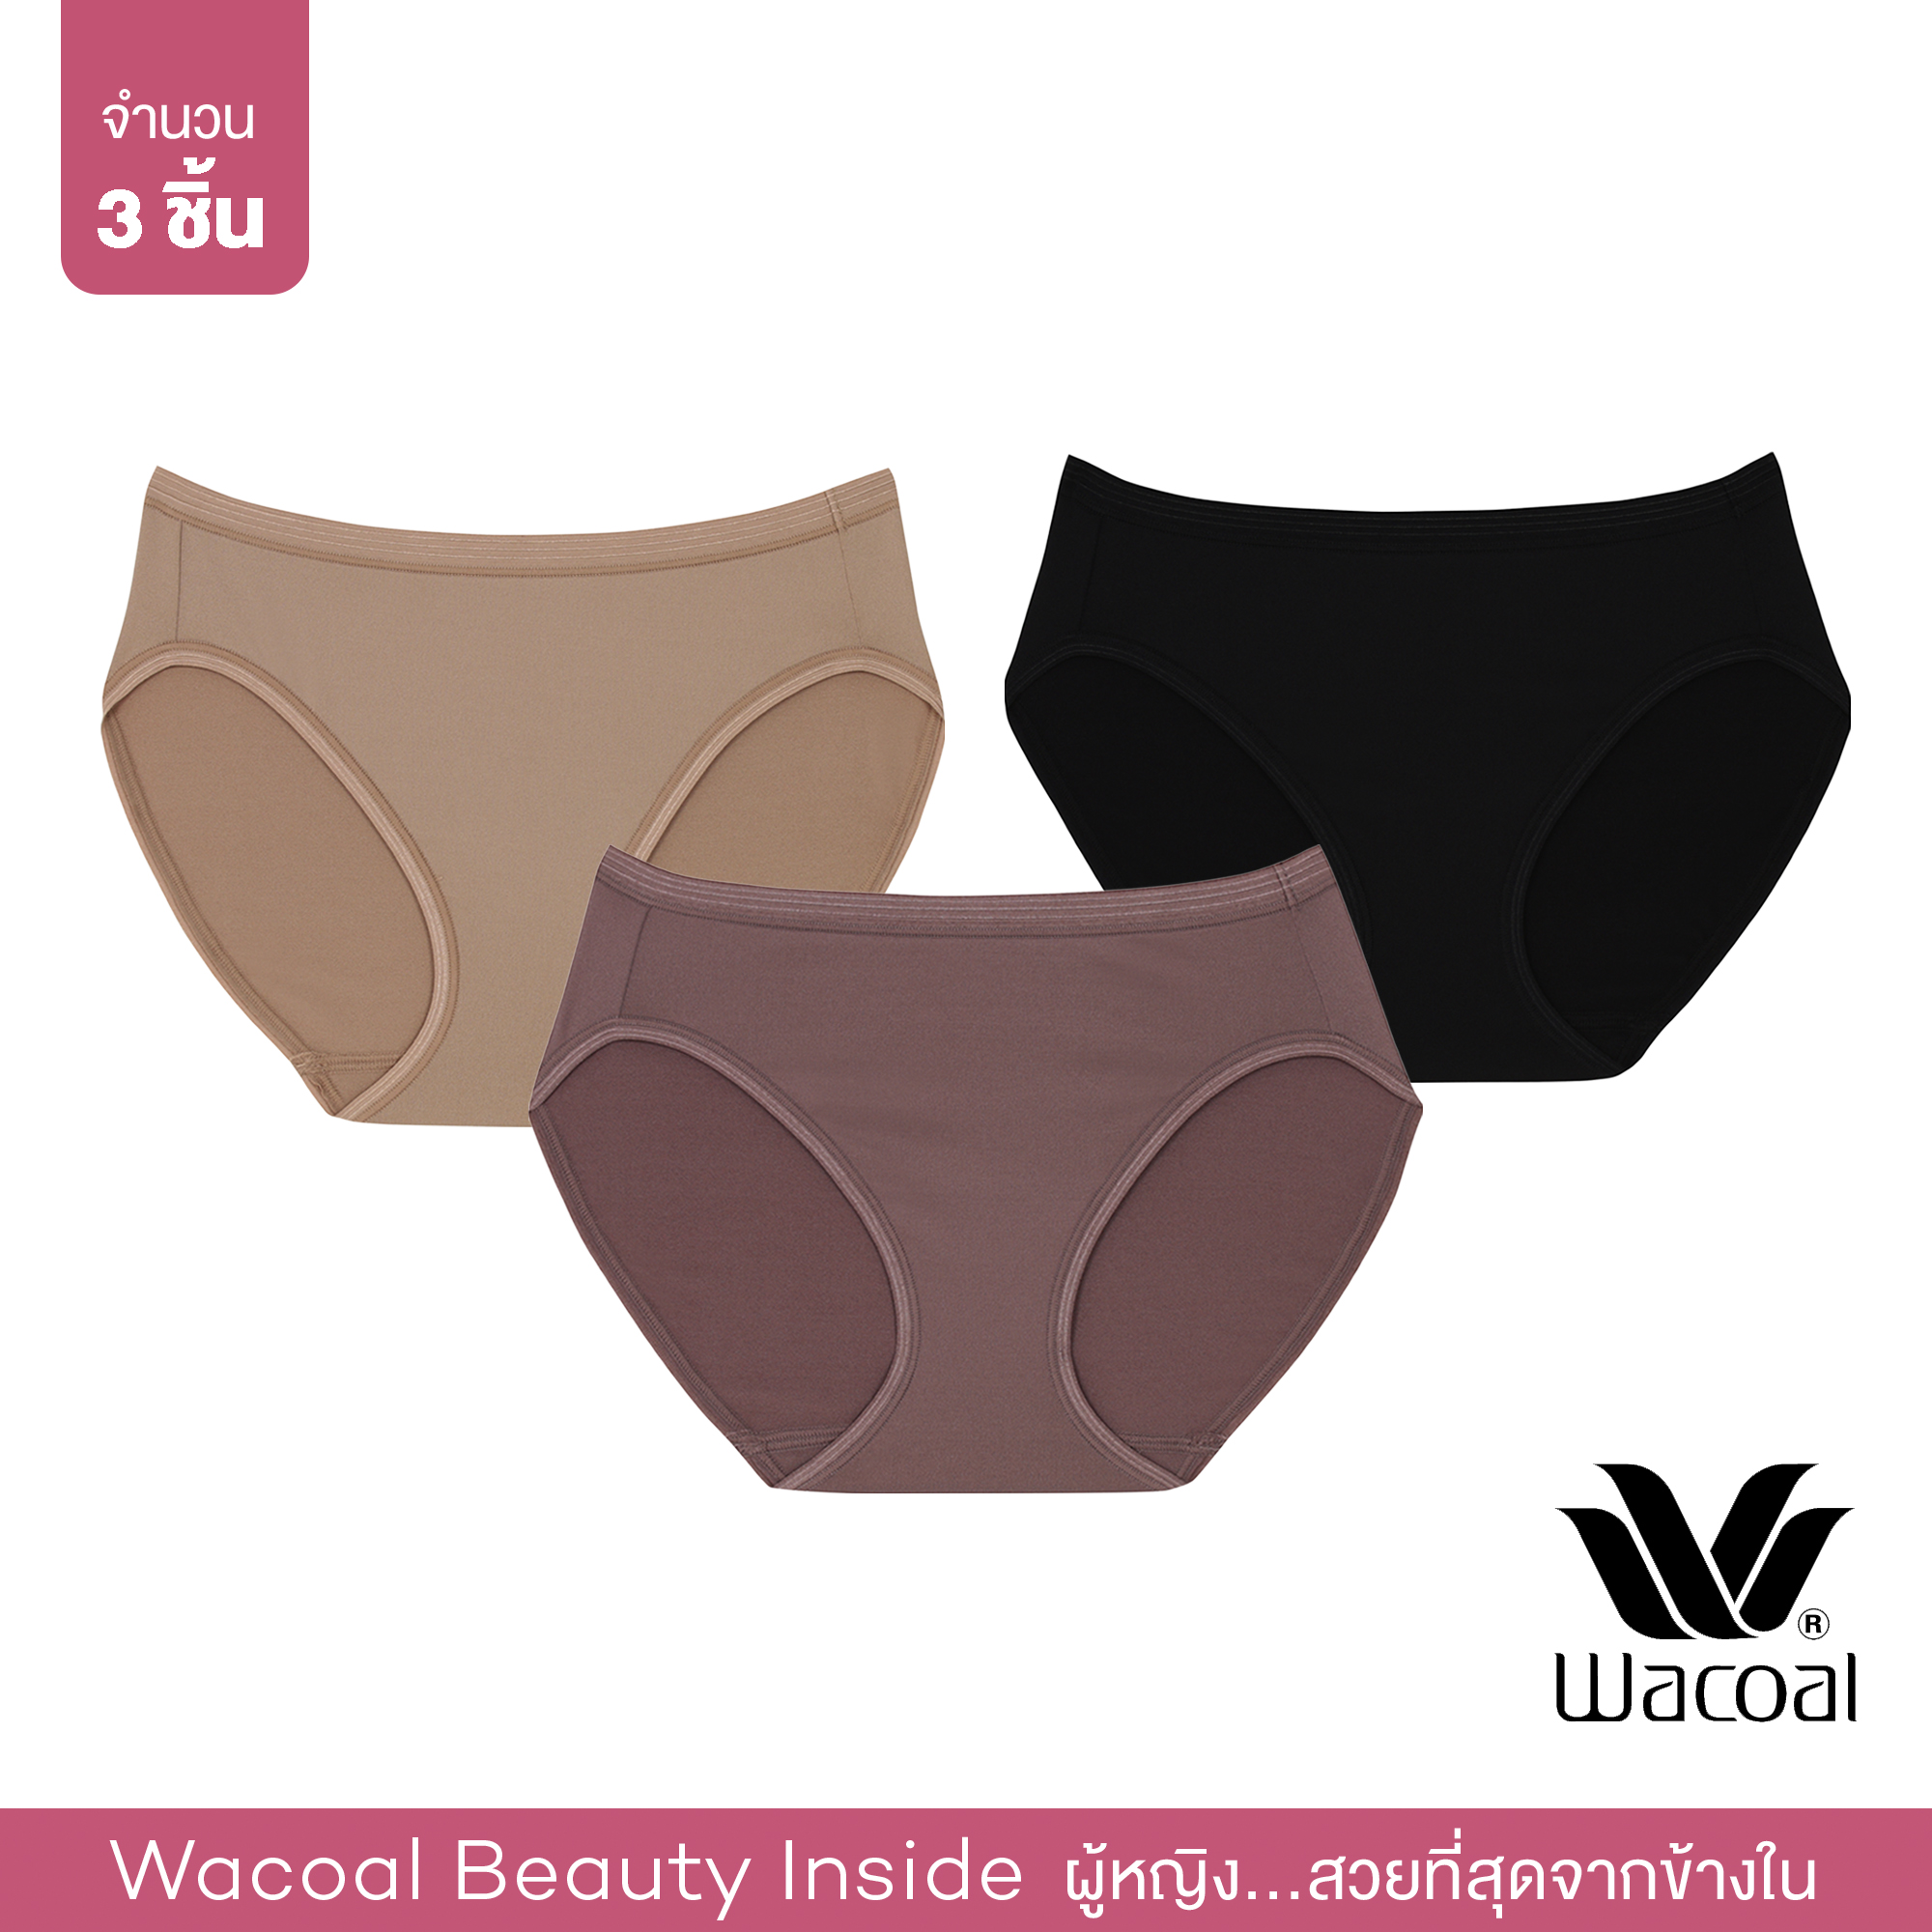 Wacoal Panty กางเกงในรูปแบบ BIKINI แบบเรียบ 1 เซ็ท 3 ชิ้น (ดำ/BLACK, โอวัลติน/OVALTINE, น้ำตาล BROWN TAN) - WU1M29